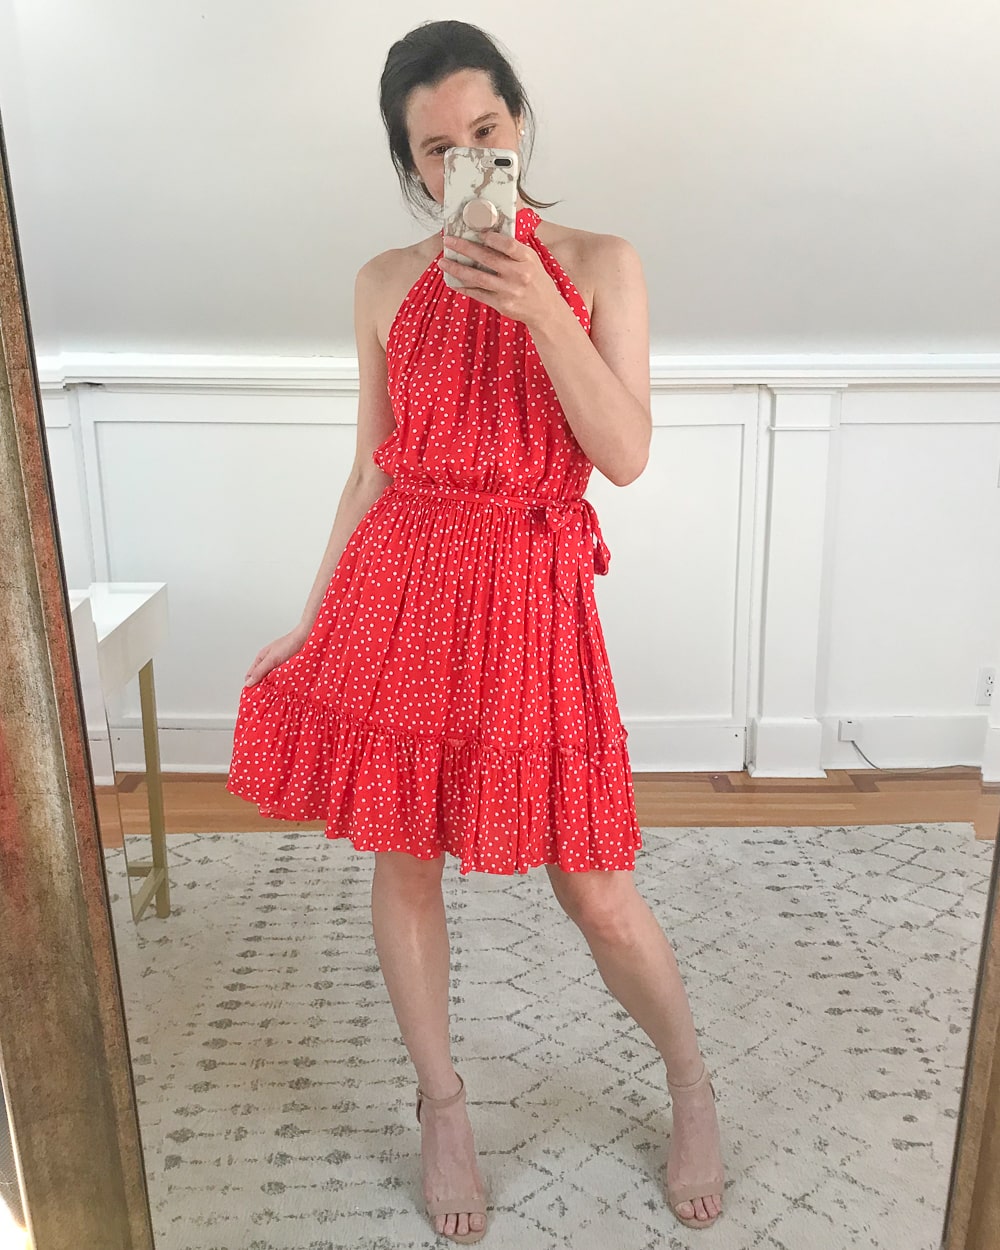 Amazon polka dot halter dress tried on by affordable fashion blogger Stephanie Ziajka on Diary of a Debutante